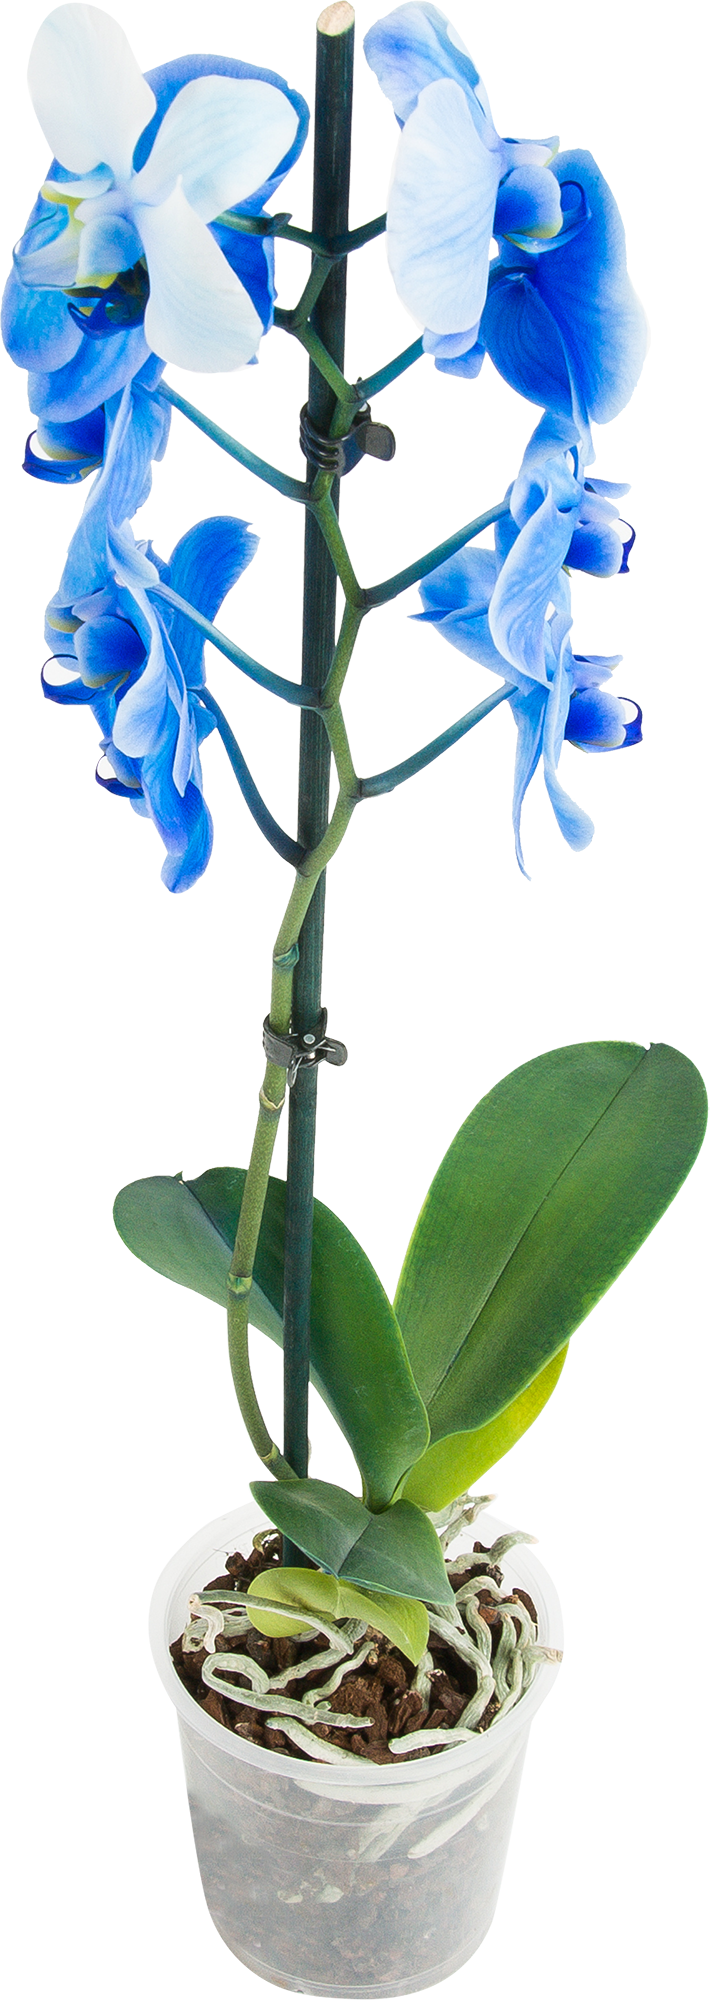 Леруа мерлен орхидея в горшке. Орхидеи в Леруа Мерлен. Фаленопсис Блю Джин. Фаленопсис leroymerlin. Синяя Орхидея Леруа Мерлен.